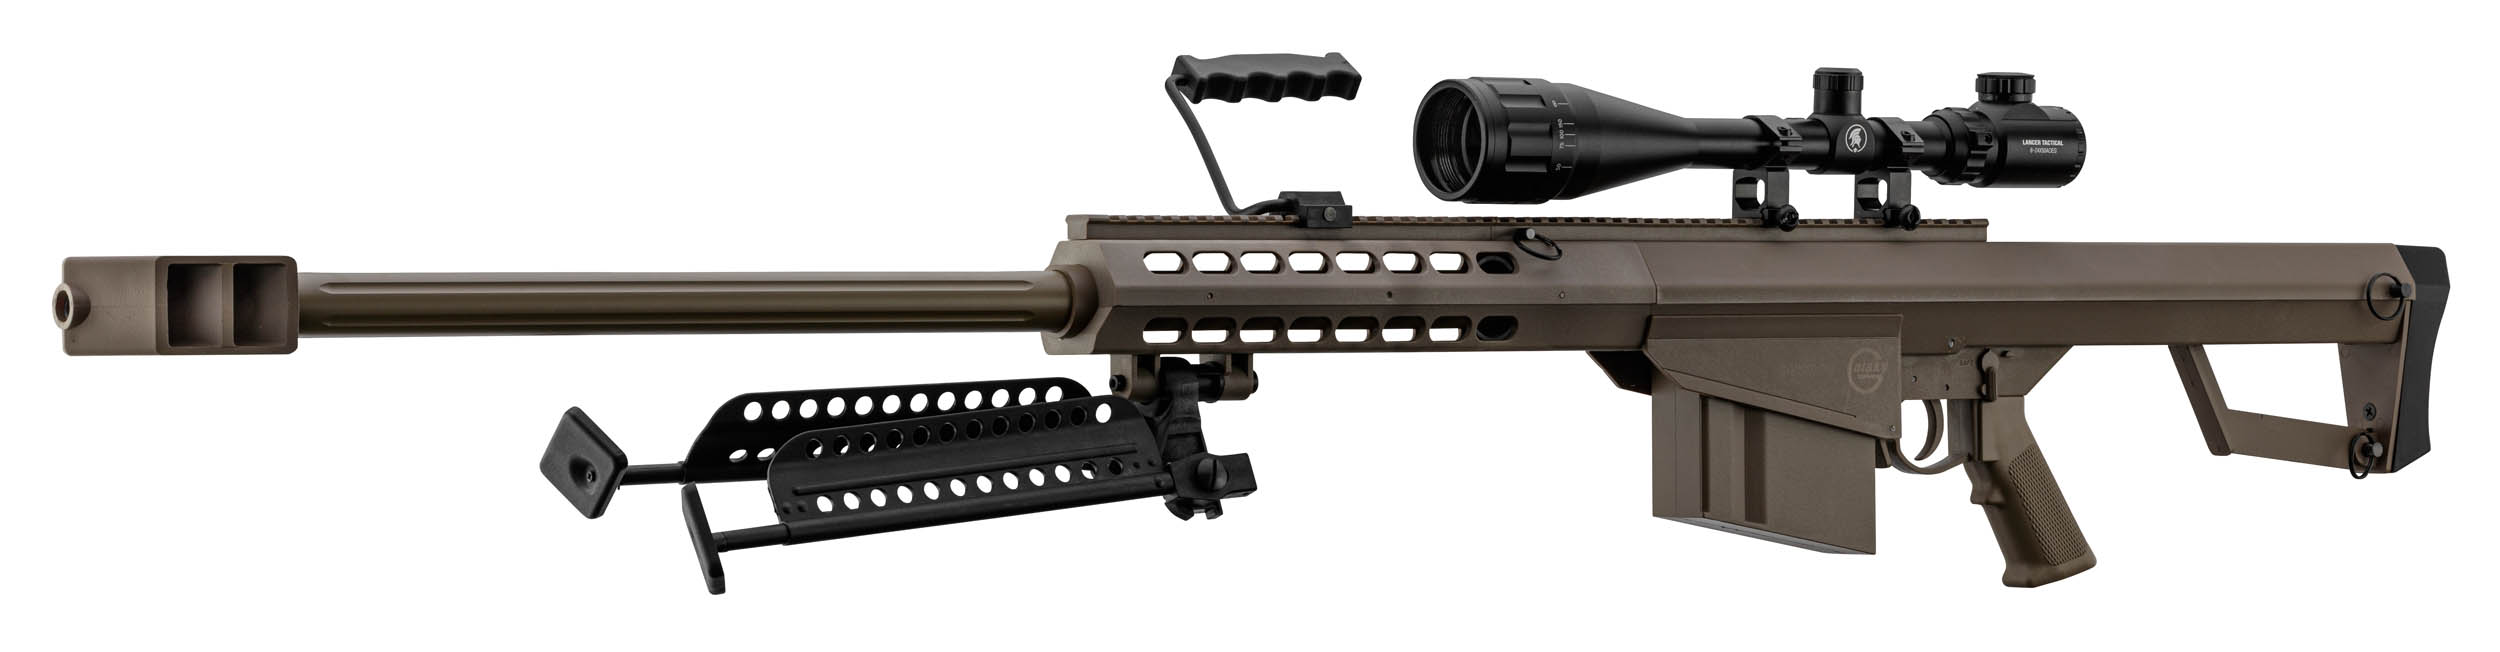 PCKLR3052-07 Pack Sniper LT-20 tan M82 1,5J + lunette + bi-pied + poignée